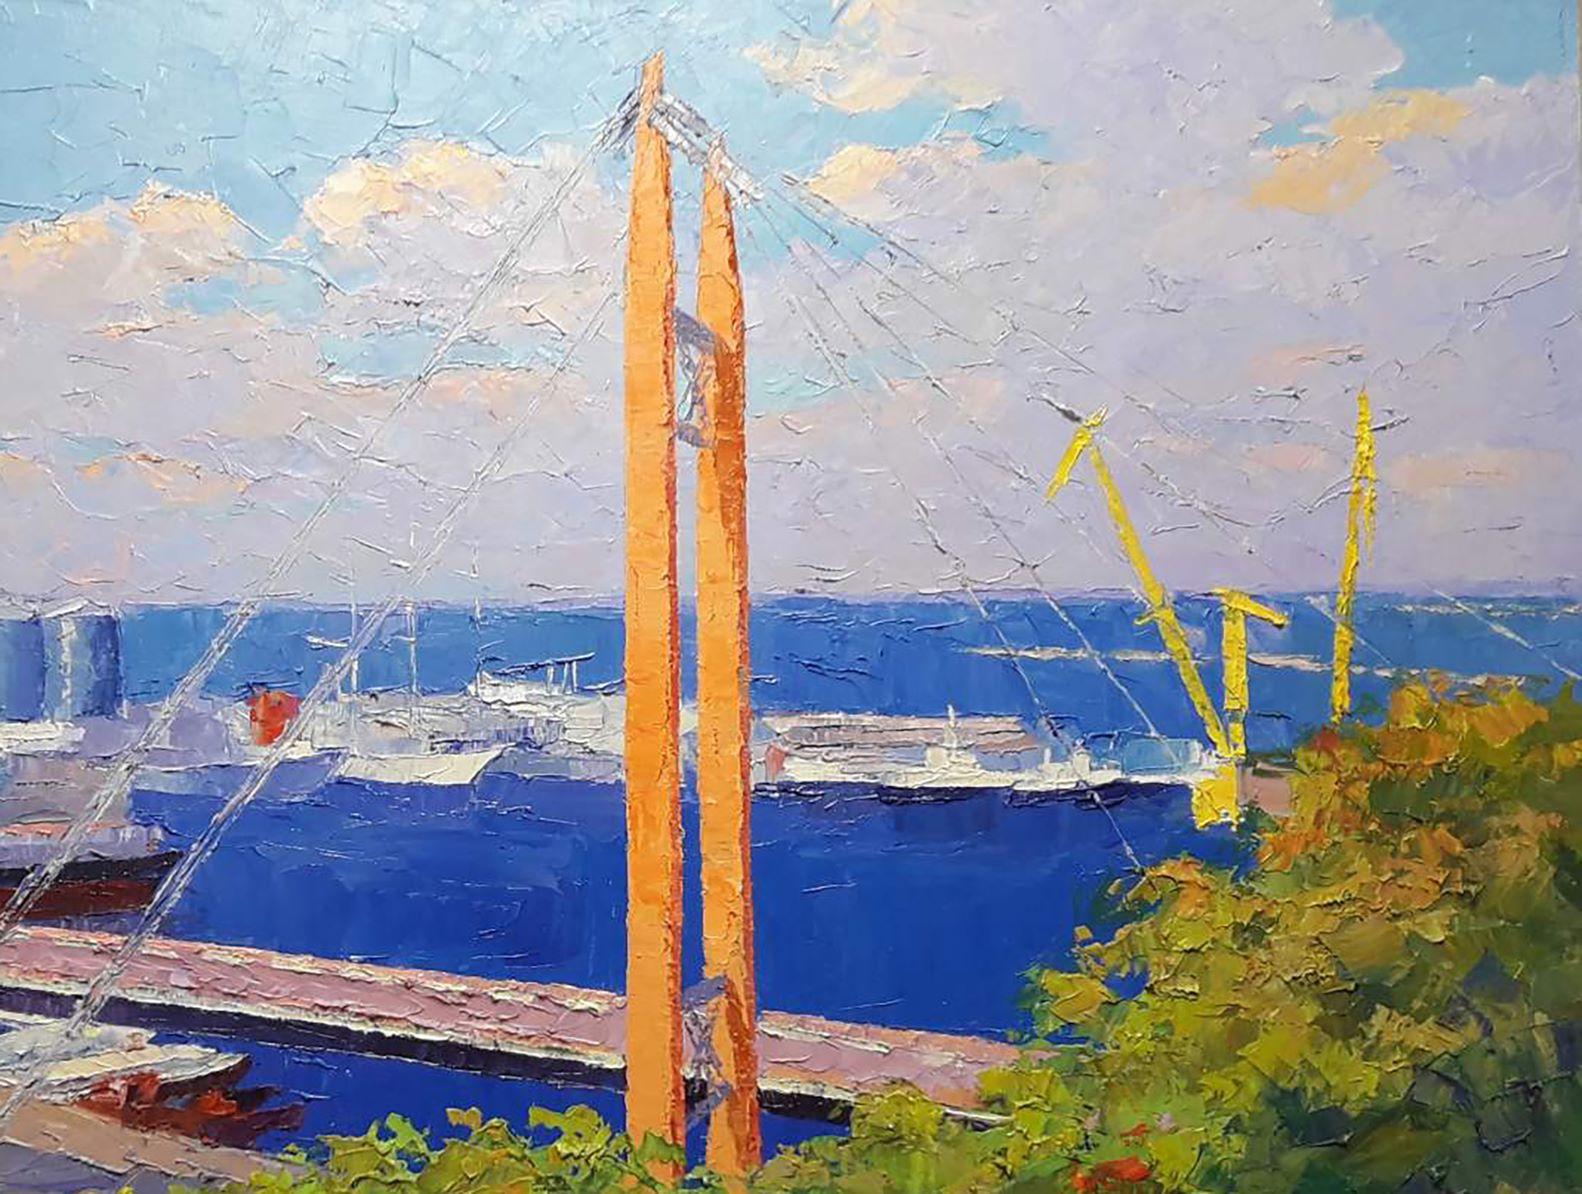 Artist: Boris Serdyuk 
Work: Original oil painting, handmade artwork, one of a kind 
Medium: Oil on Canvas
Style: Impressionism
Year: 2020
Title: Odessa Port
Size: 31.5